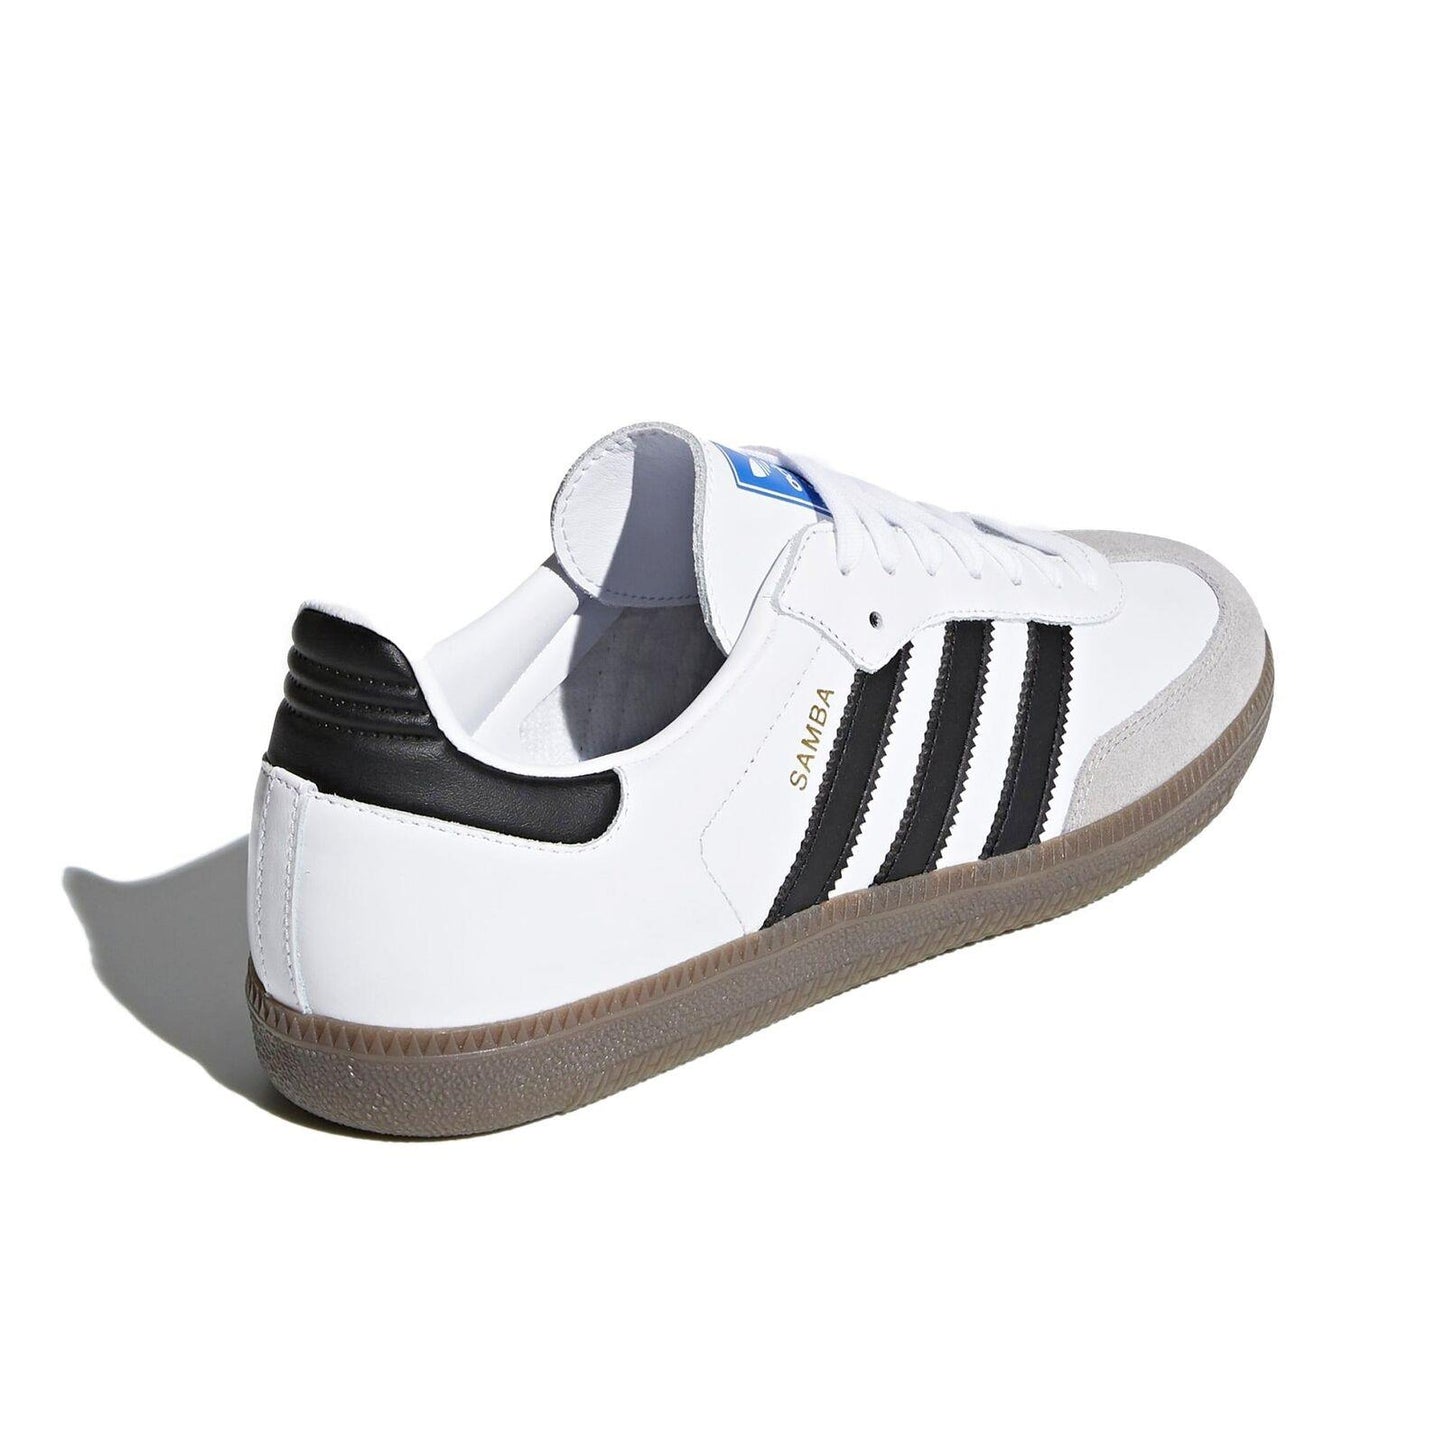 Adidas Originals Samba OG B75806 Trainers Cloud White/Core Black/Clear Granite UK 8-11